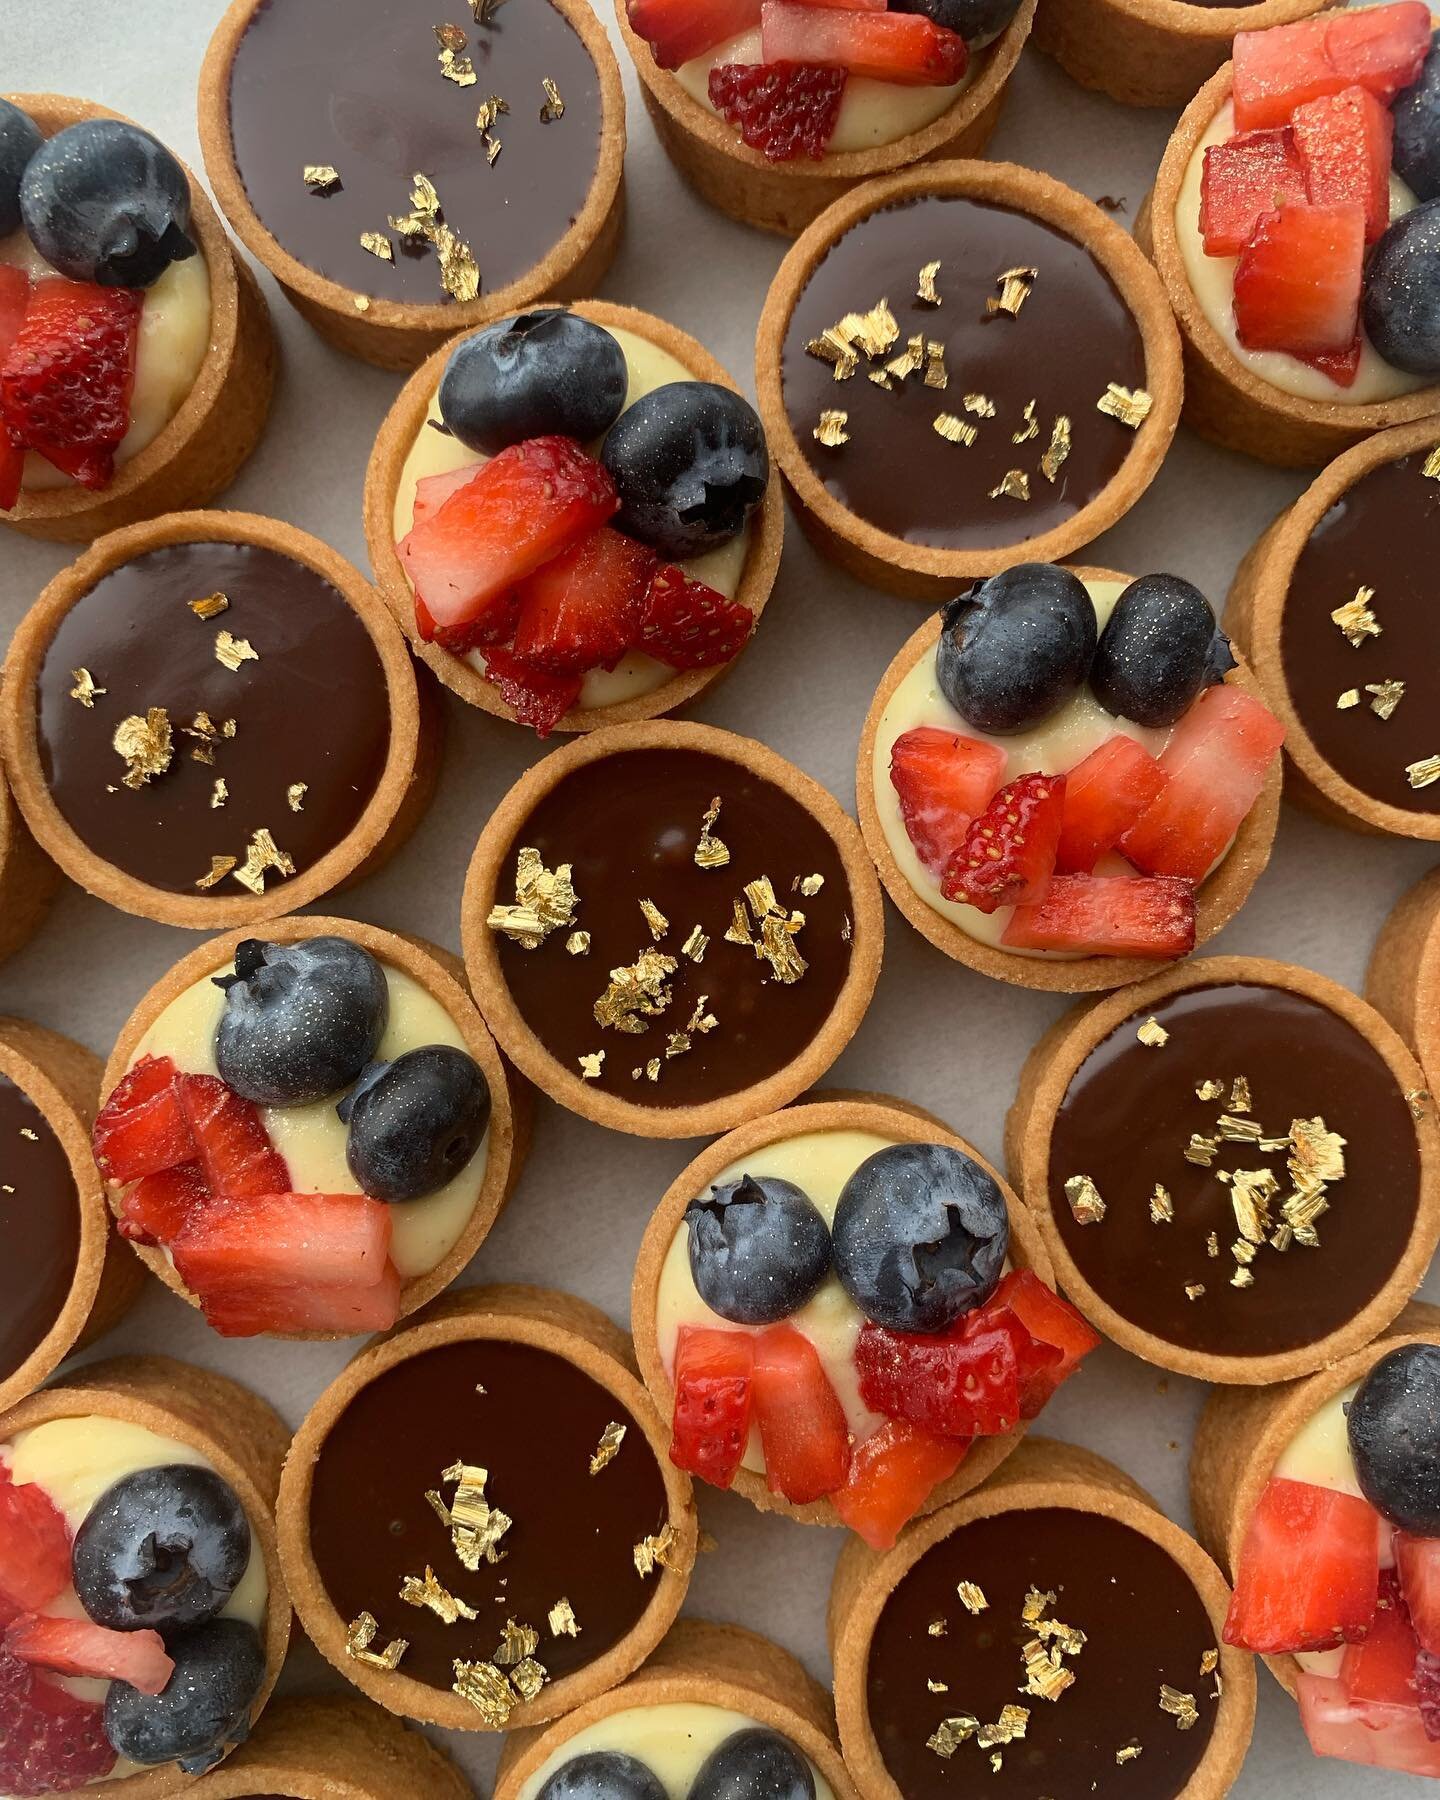 Our mini tarts are perfect sweet treat for any occasion! 
&mdash;
#tarts #minitarts #fruittarts #chocolatetarts #cremebruleetarts #ubetarts #chocolateraspberrytarts #calamansitarts #lemontarts #lemonmeringuetart #prettysweetbash